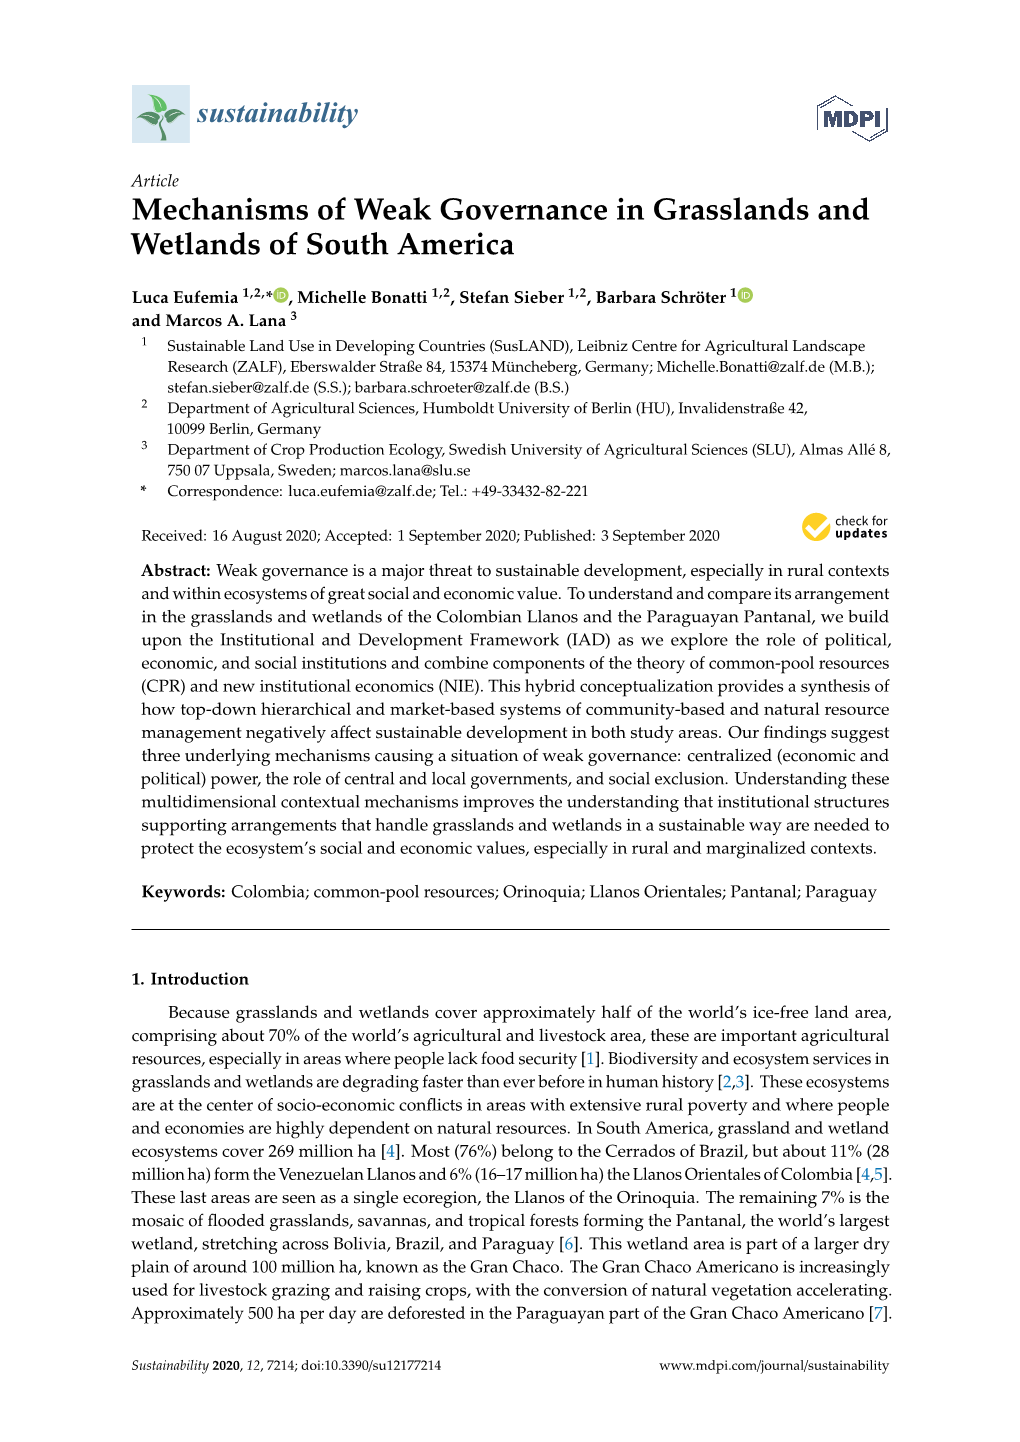 Mechanisms of Weak Governance in Grasslands and Wetlands of South America